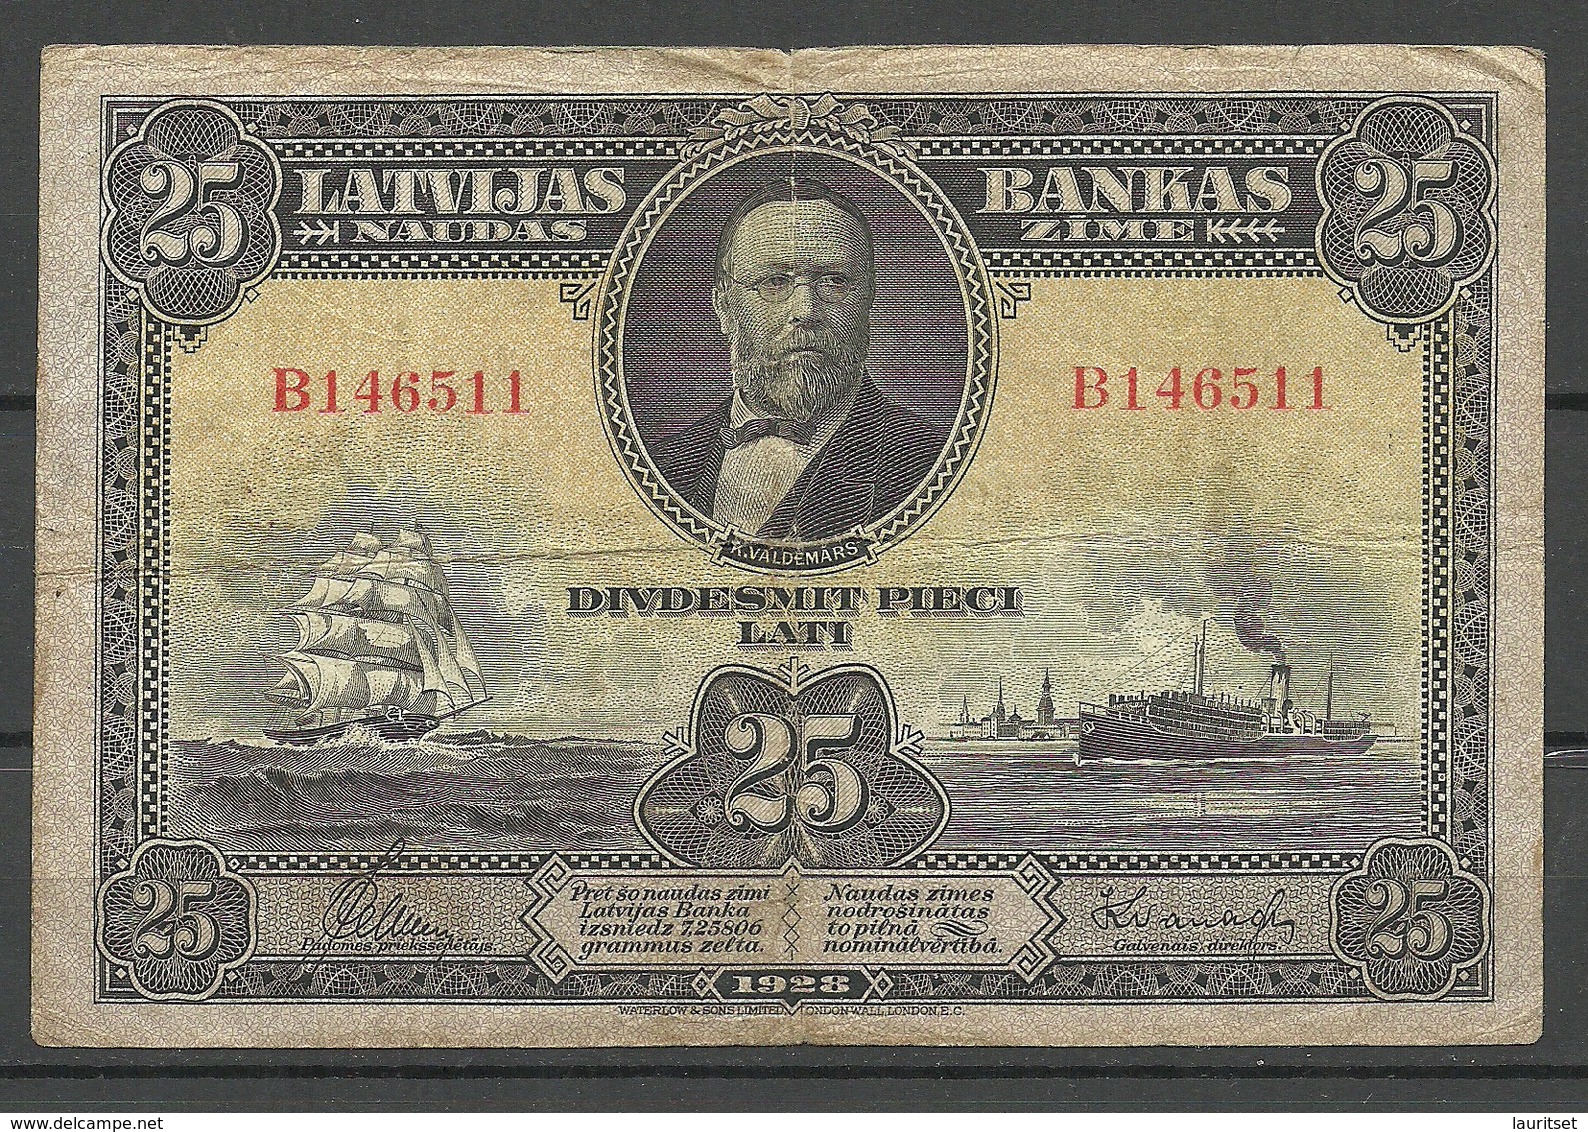 LATVIA Lettland 1928 Bank Note Banknote 25 Lati - Latvia